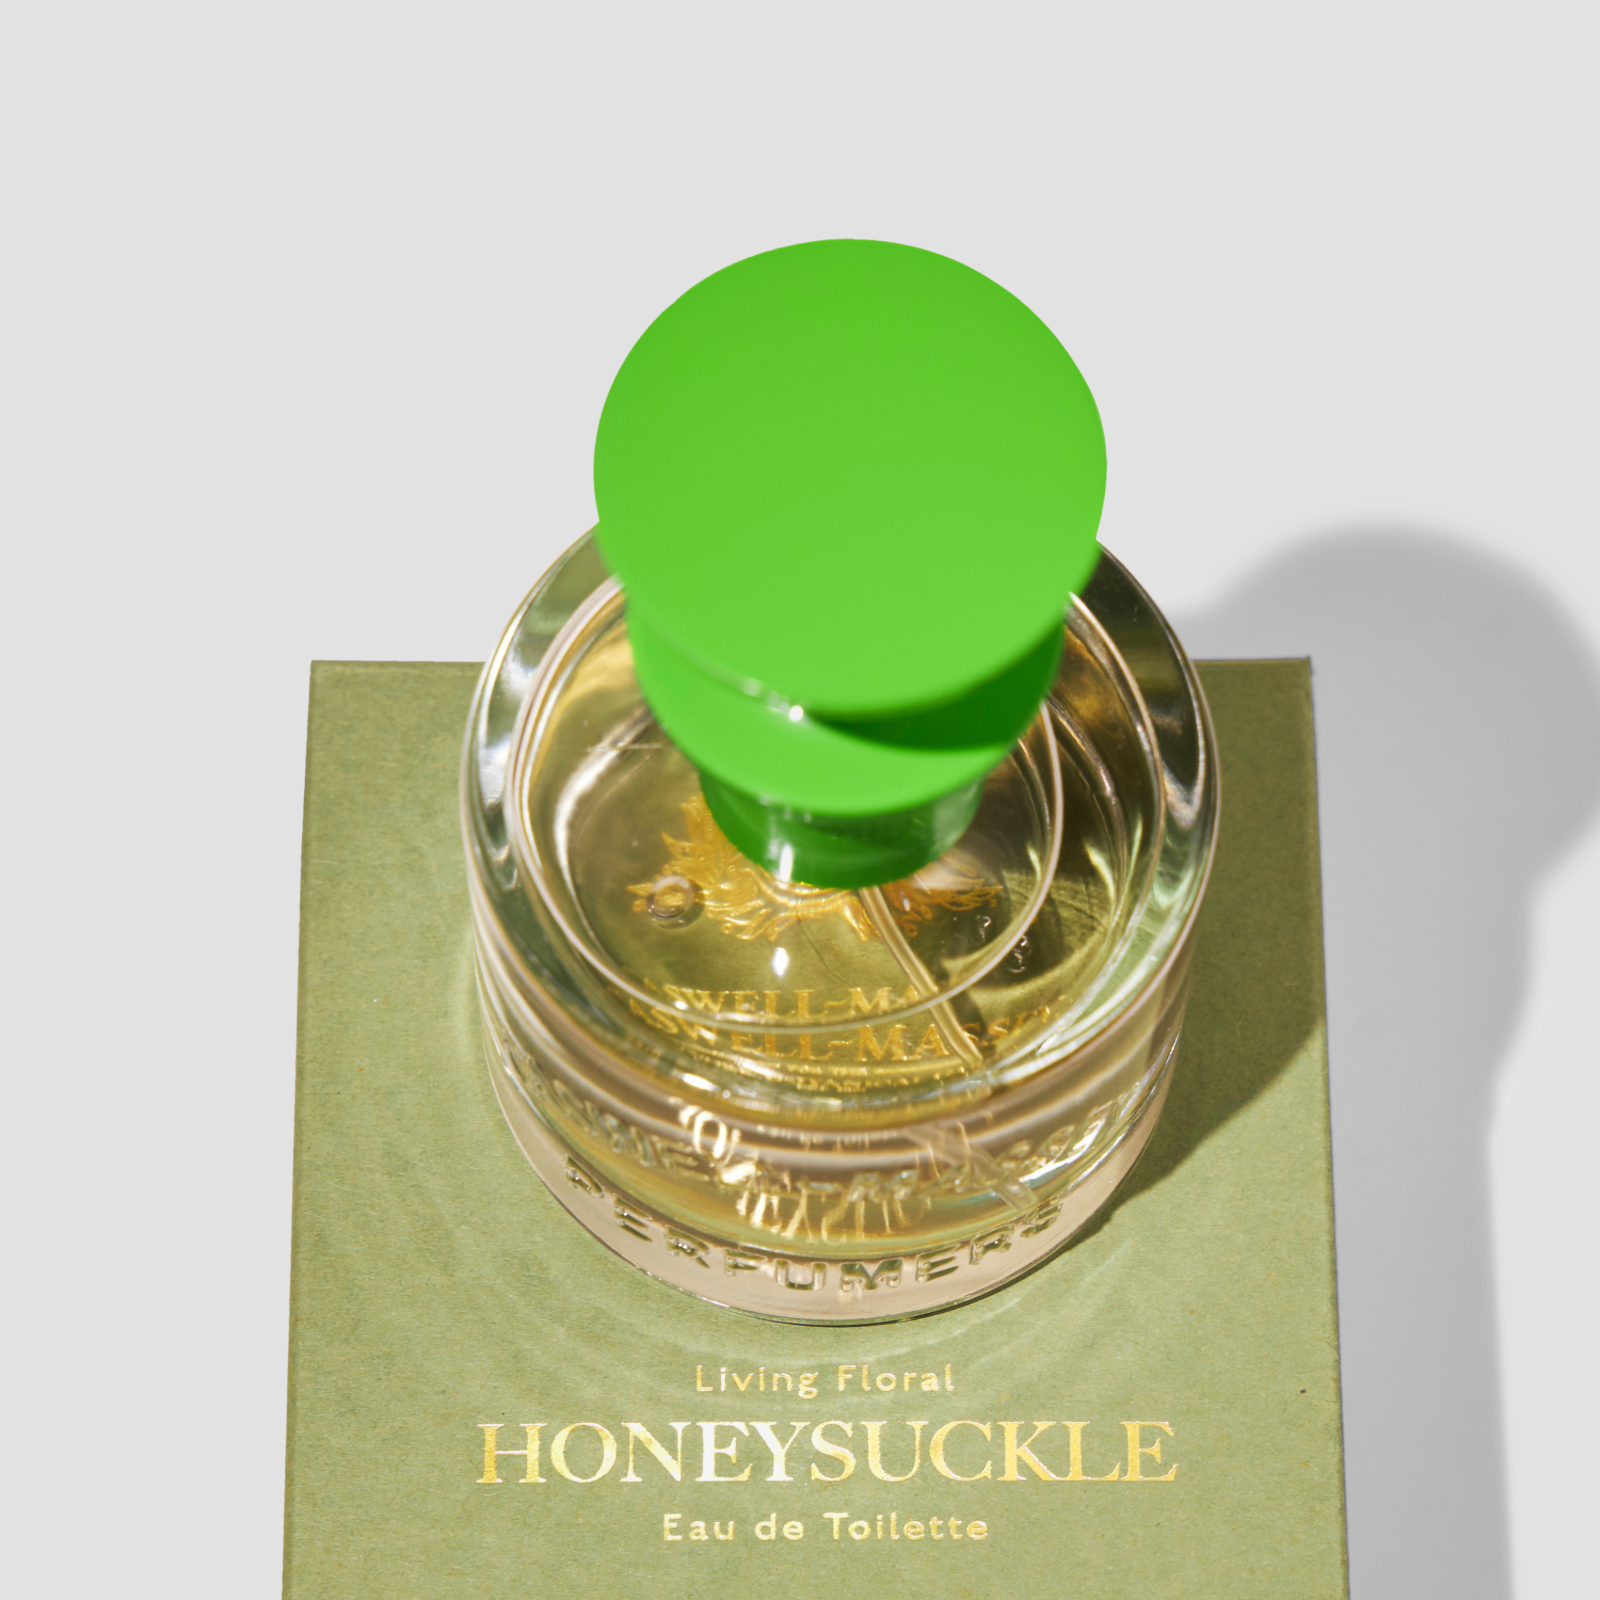 Caswell-Massey Honeysuckle Eau de Toilette for women, full size 60ml bottle on top of outer sage green packaging